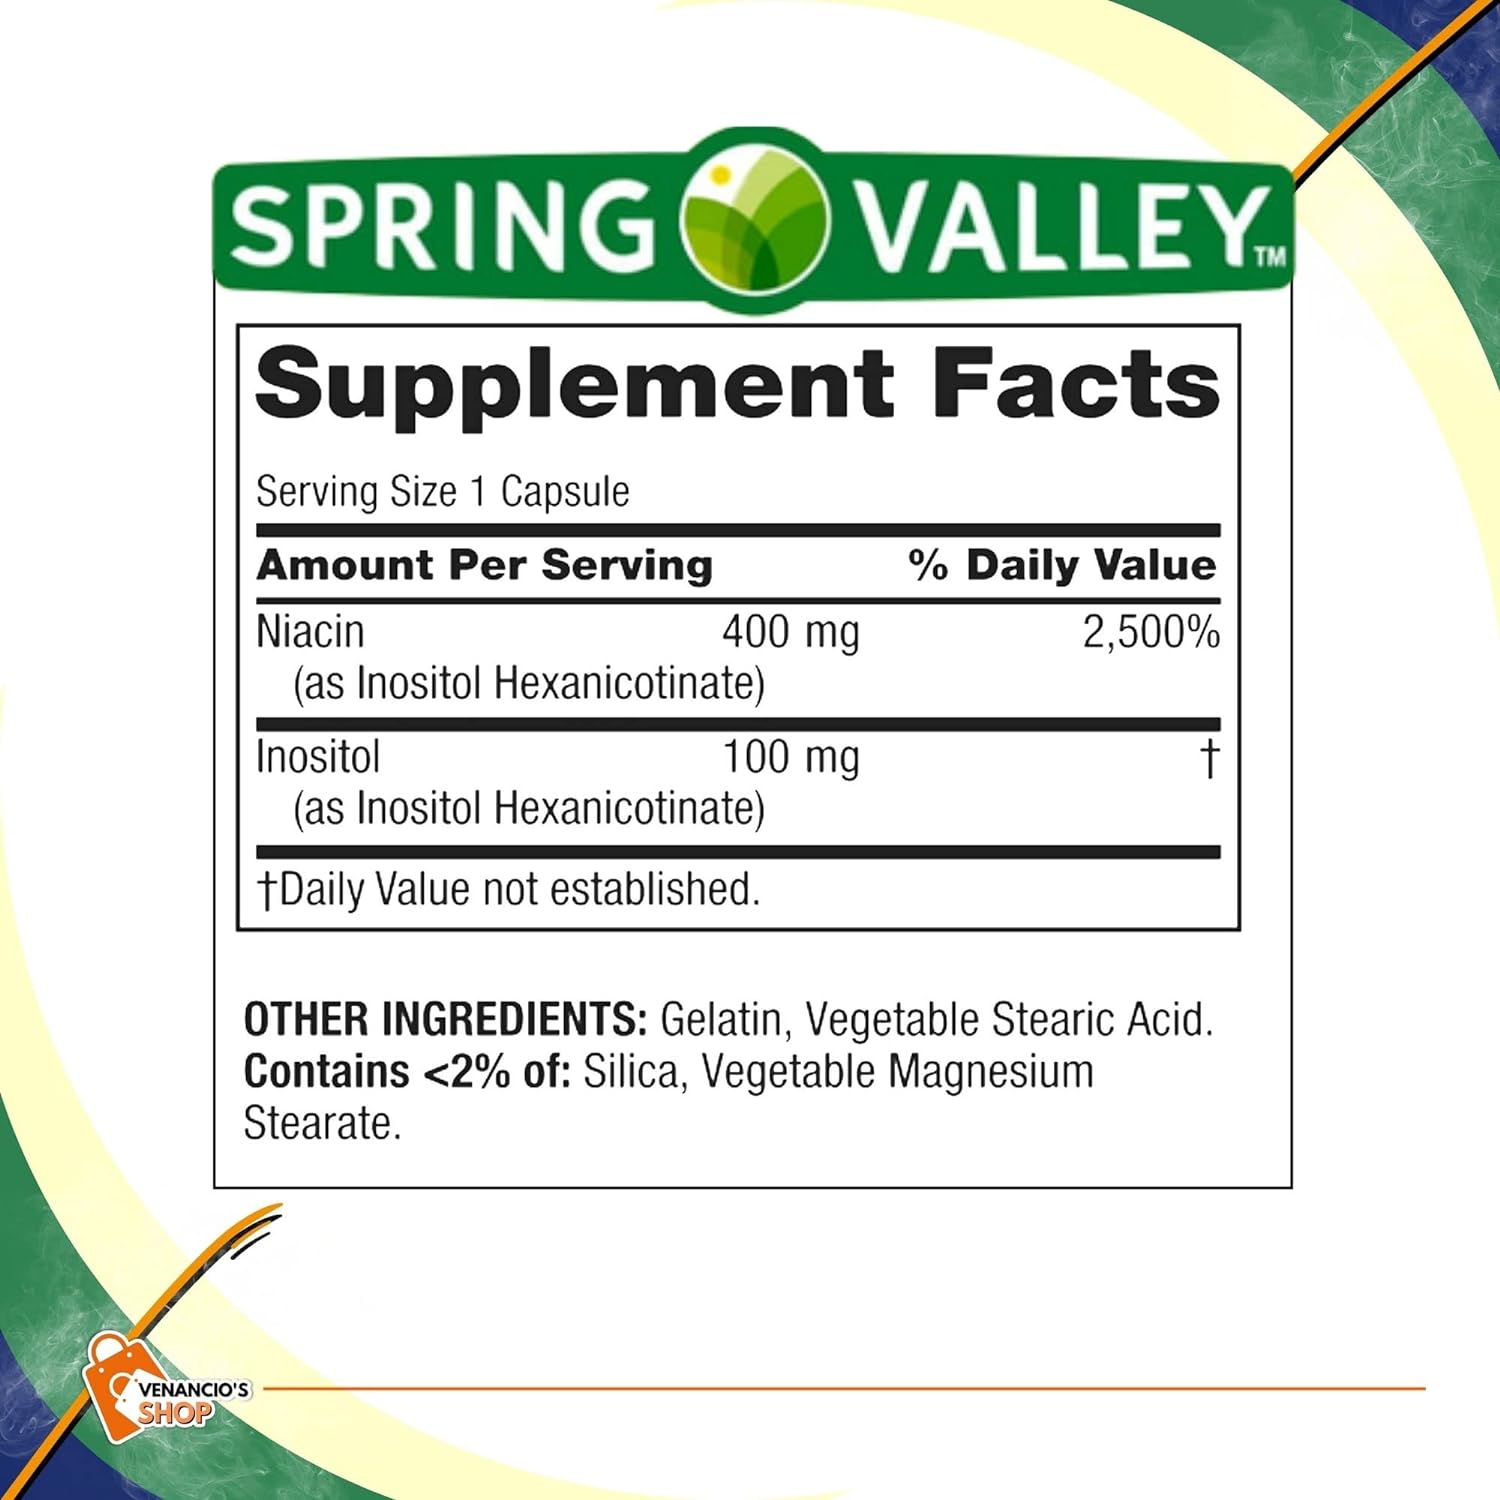 Spring Valley Vitamin B3 Niacin 500mg Flush Free Capsules, Dietary Supplement and Metabolism Support Supplement *+ Includes Venancio’sFridge Sticker (60 Pills)